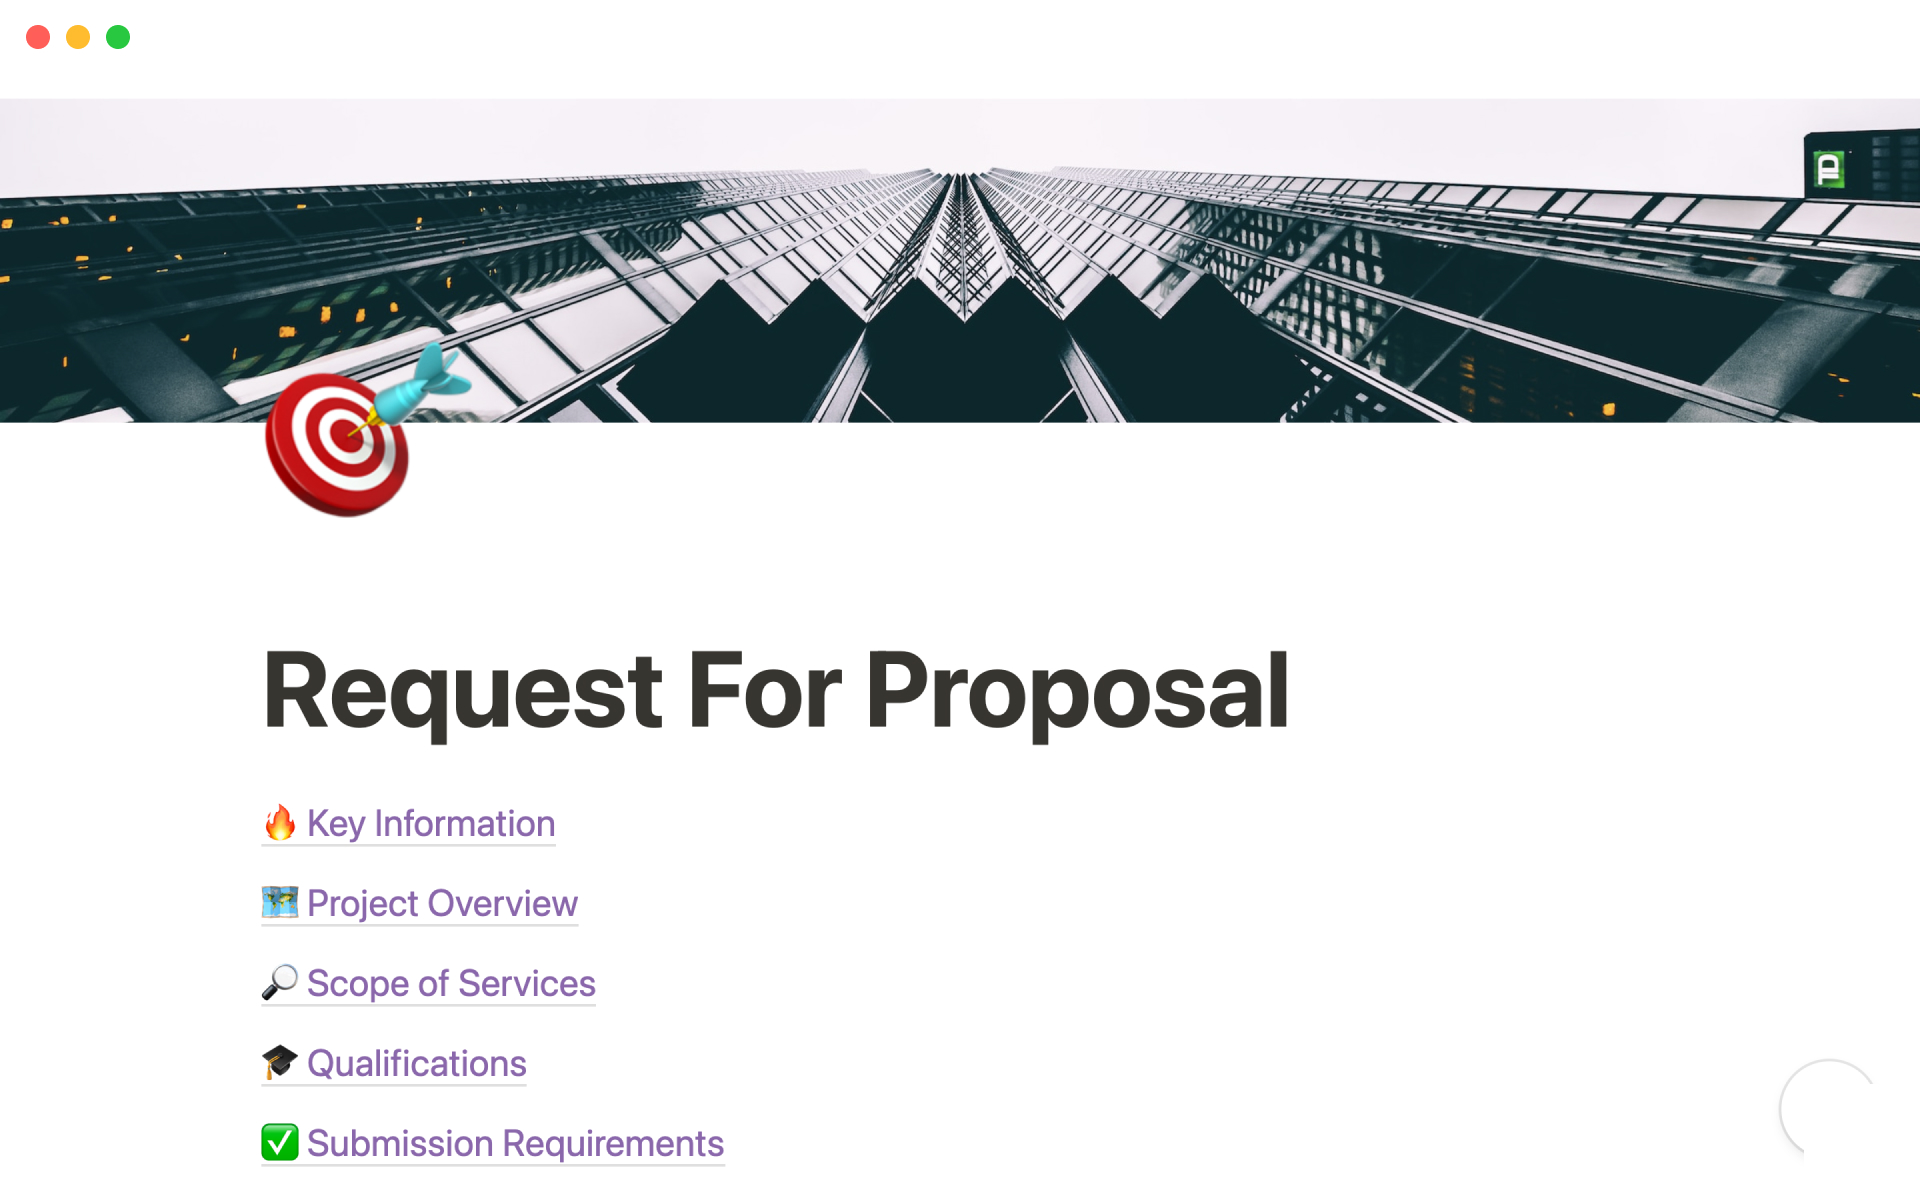 Ensure a consistent process when requesting proposals.